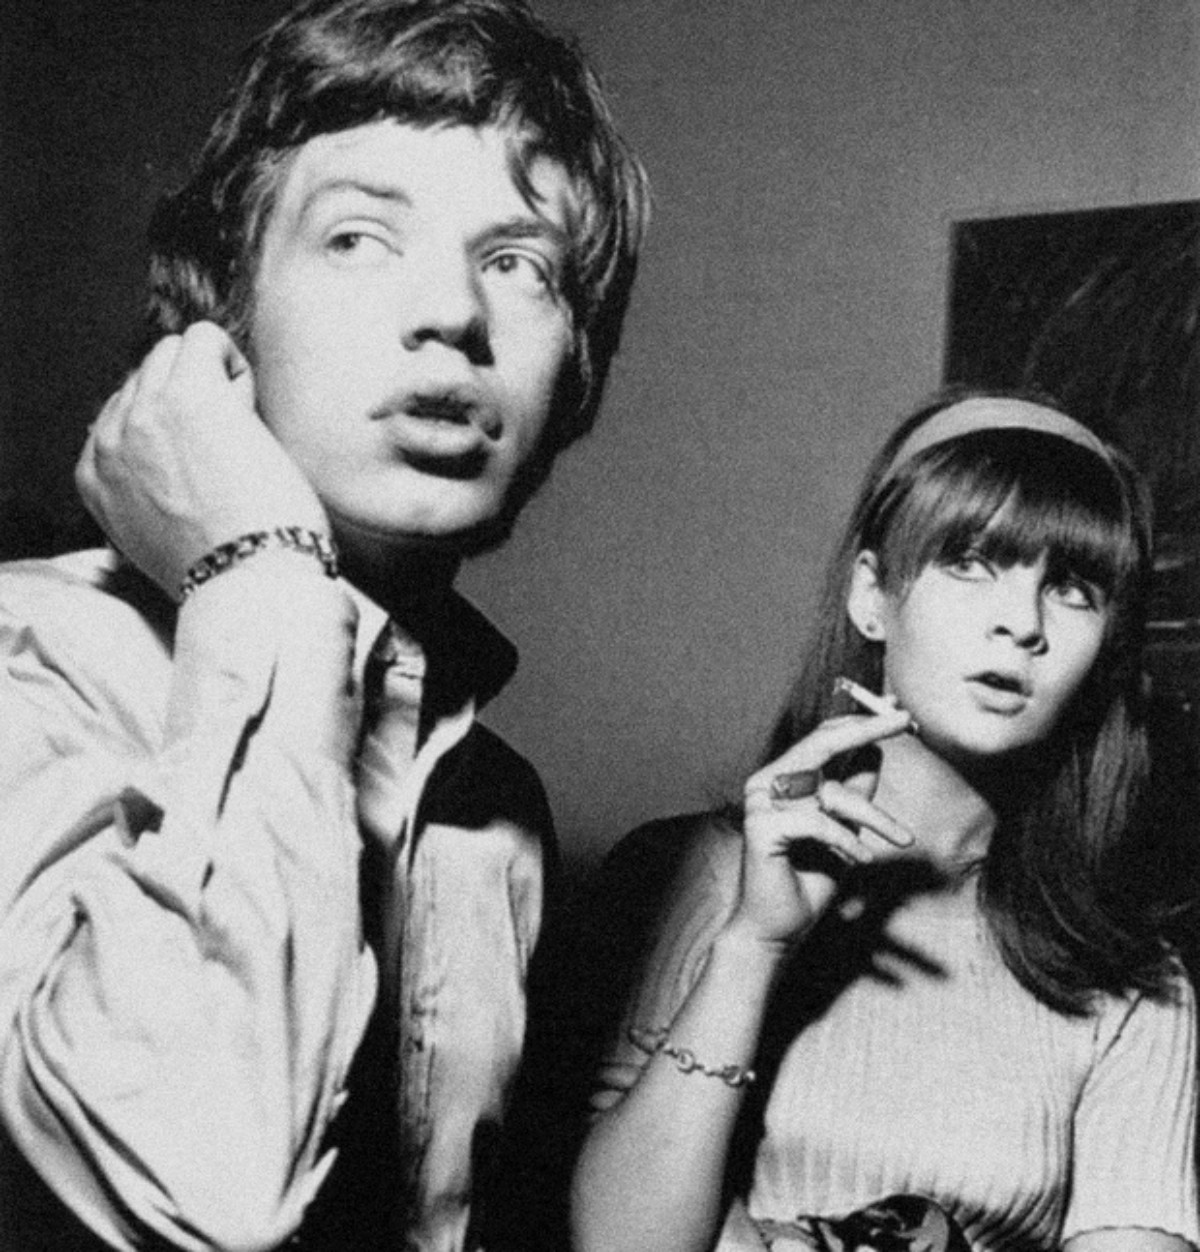 Mick Jagger and Chrissy Shrimpton